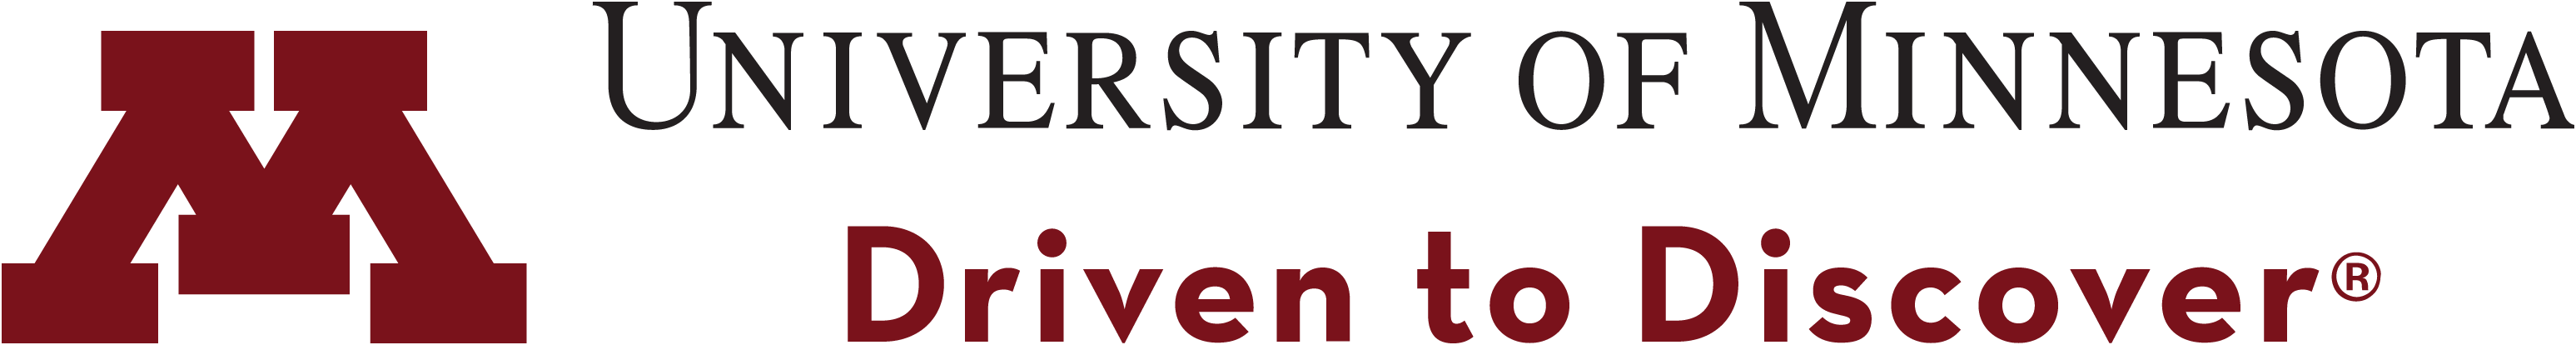 University of Minnesota – Arts, Sciences and Engineering Graduate